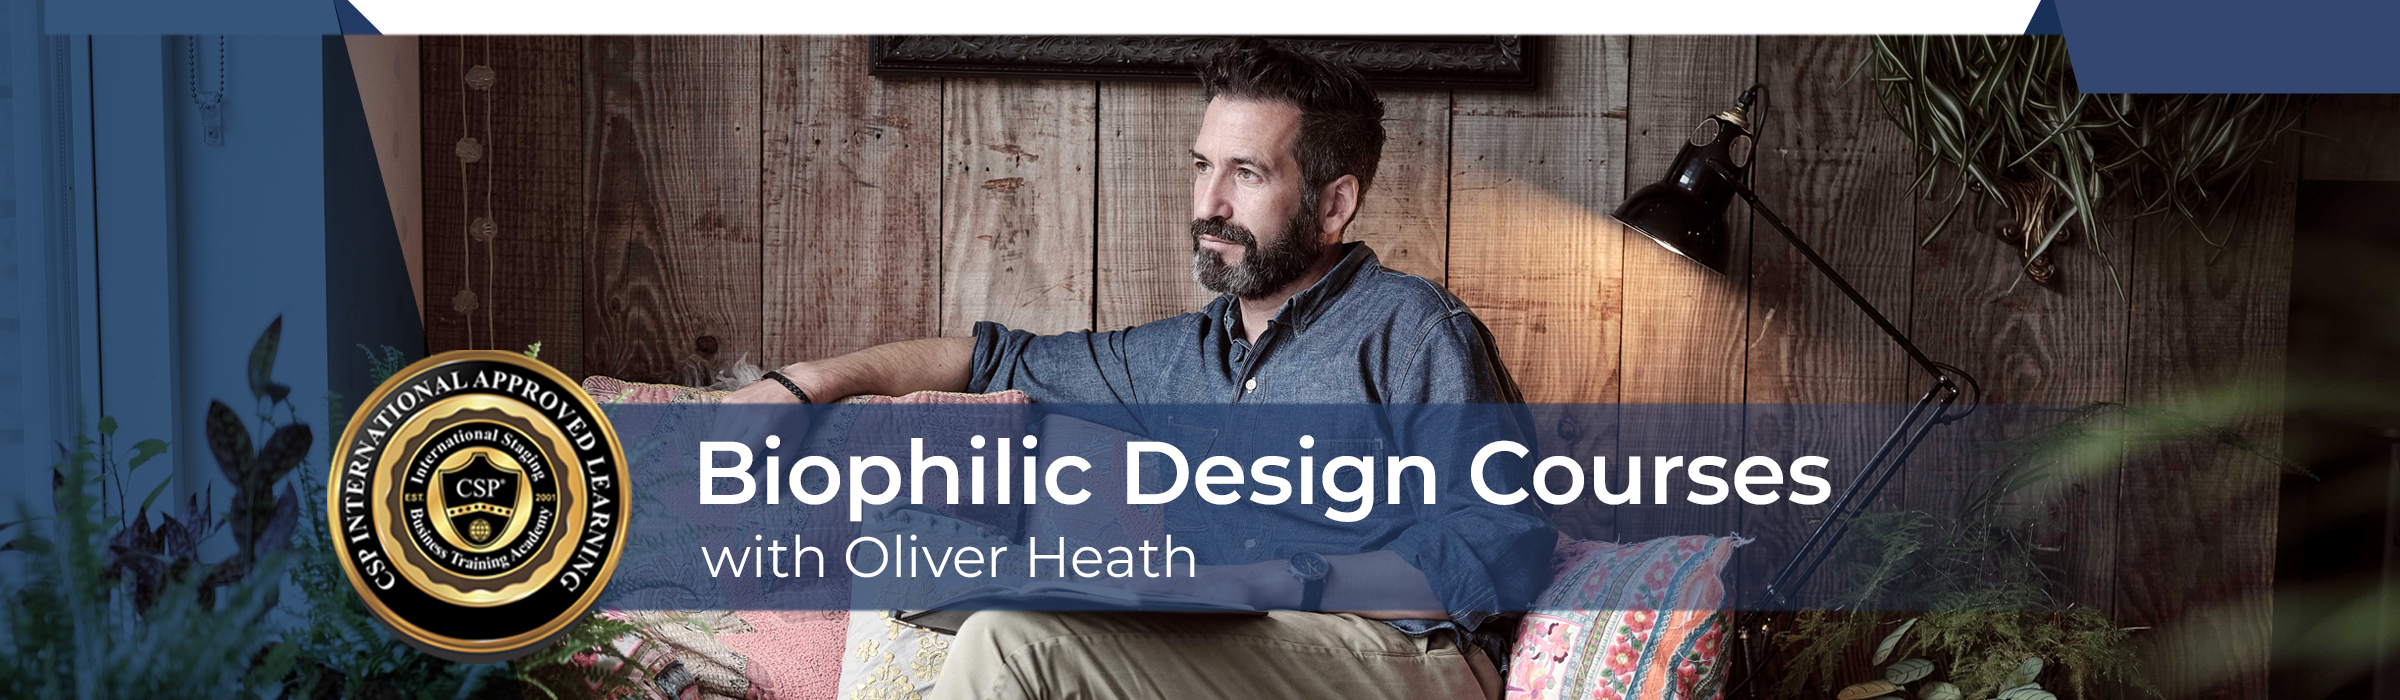 oliver heath biophilic design